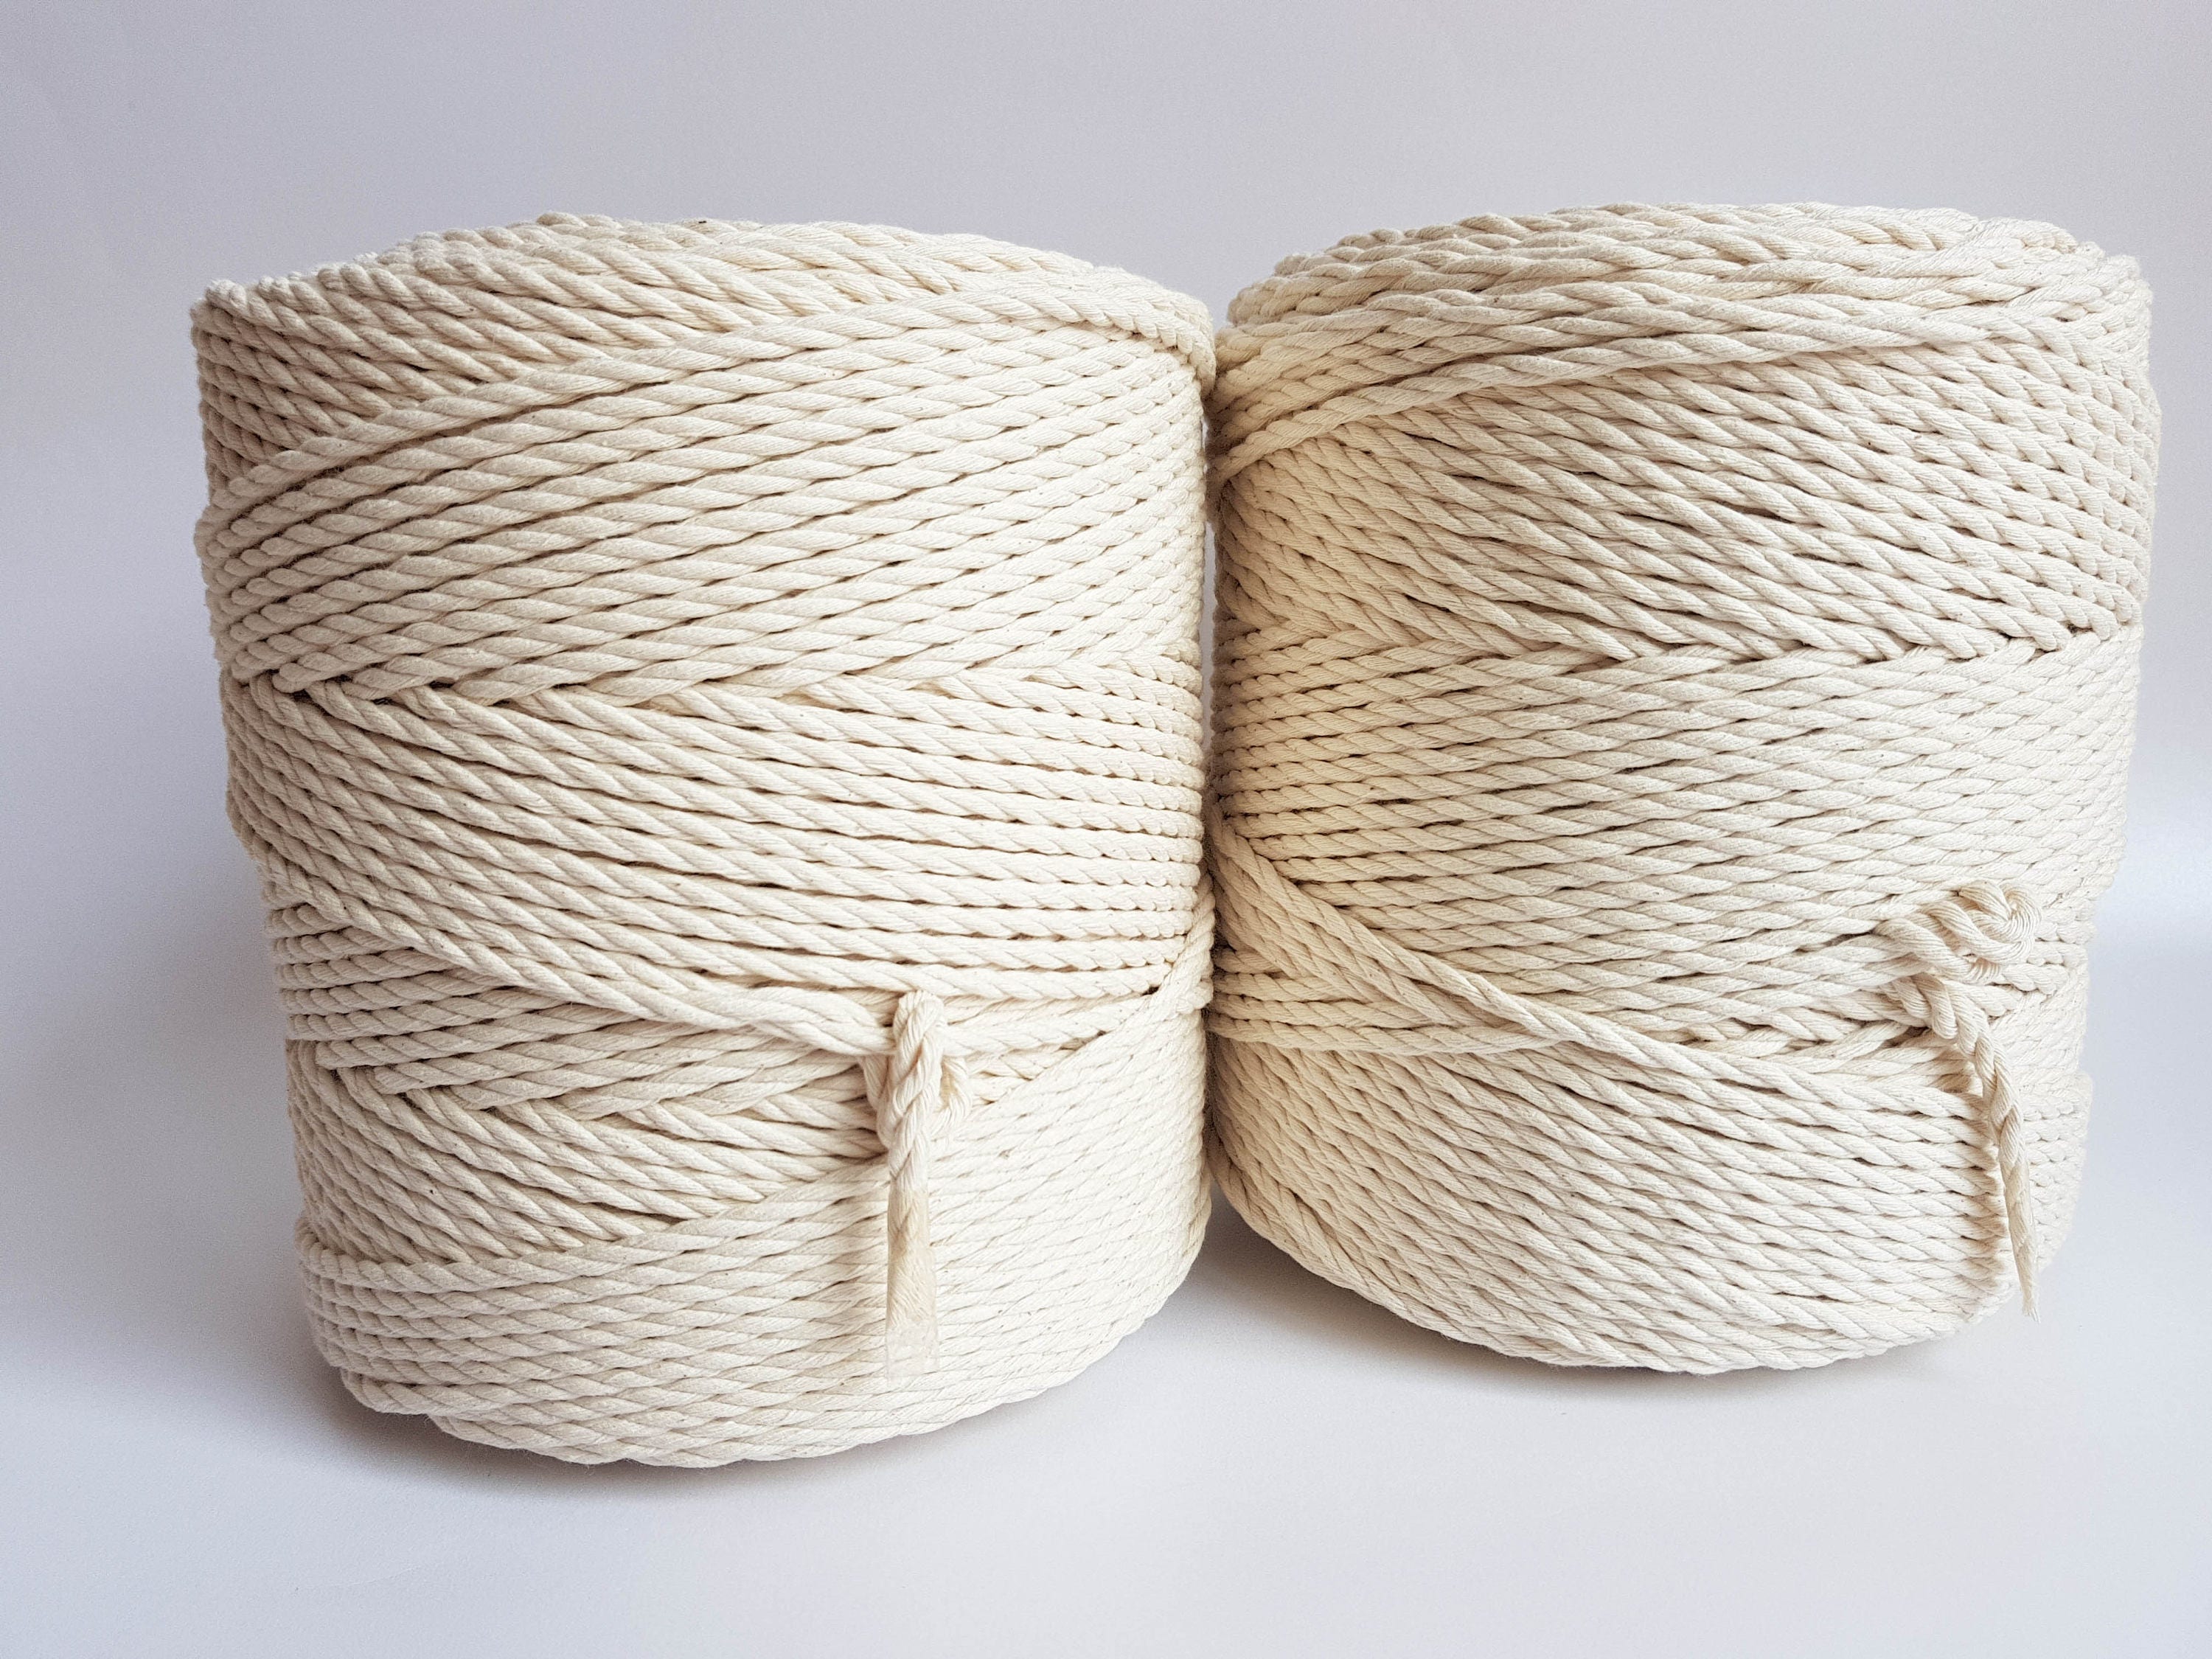 Litake Natural Macrame Cord 1 Roll 1-6mm Bohemia Natural Cotton Cord  Twisted Macrame Yarn Handmade DIY Crafts Cord Perfect Macrame Supplies 